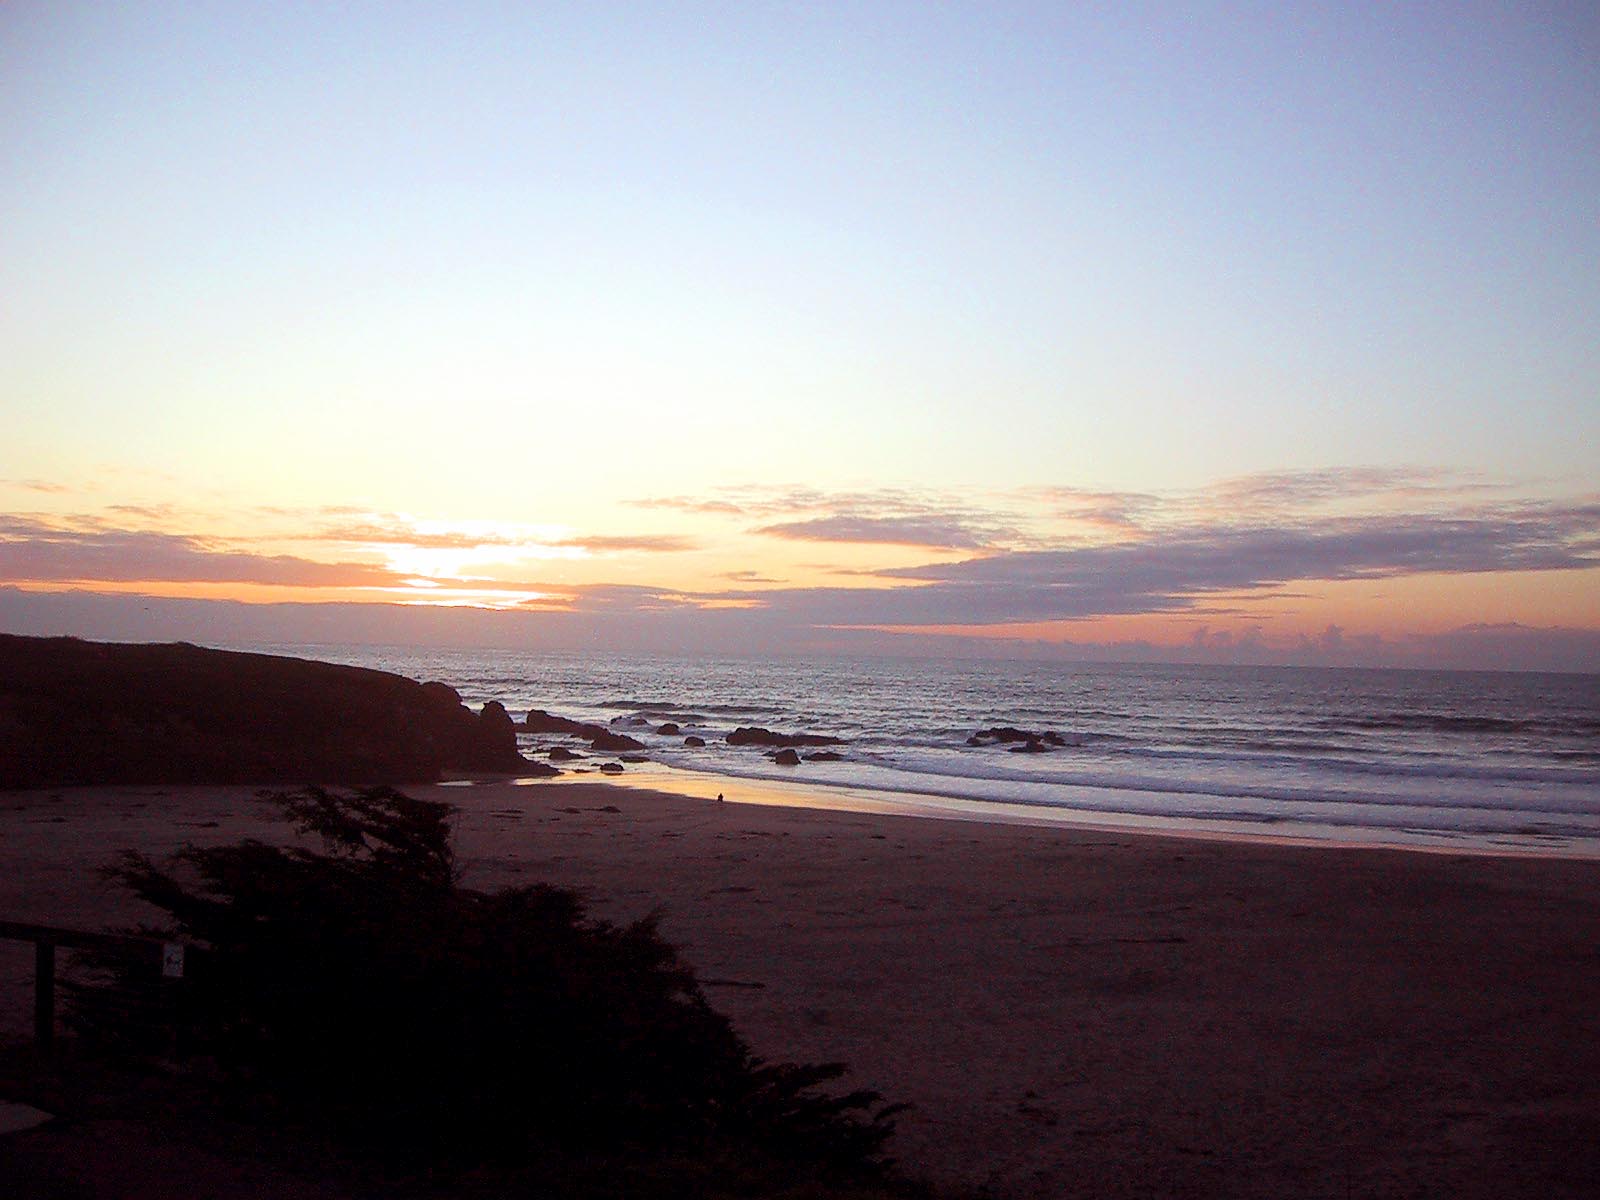 Sunset at the Beachcomber